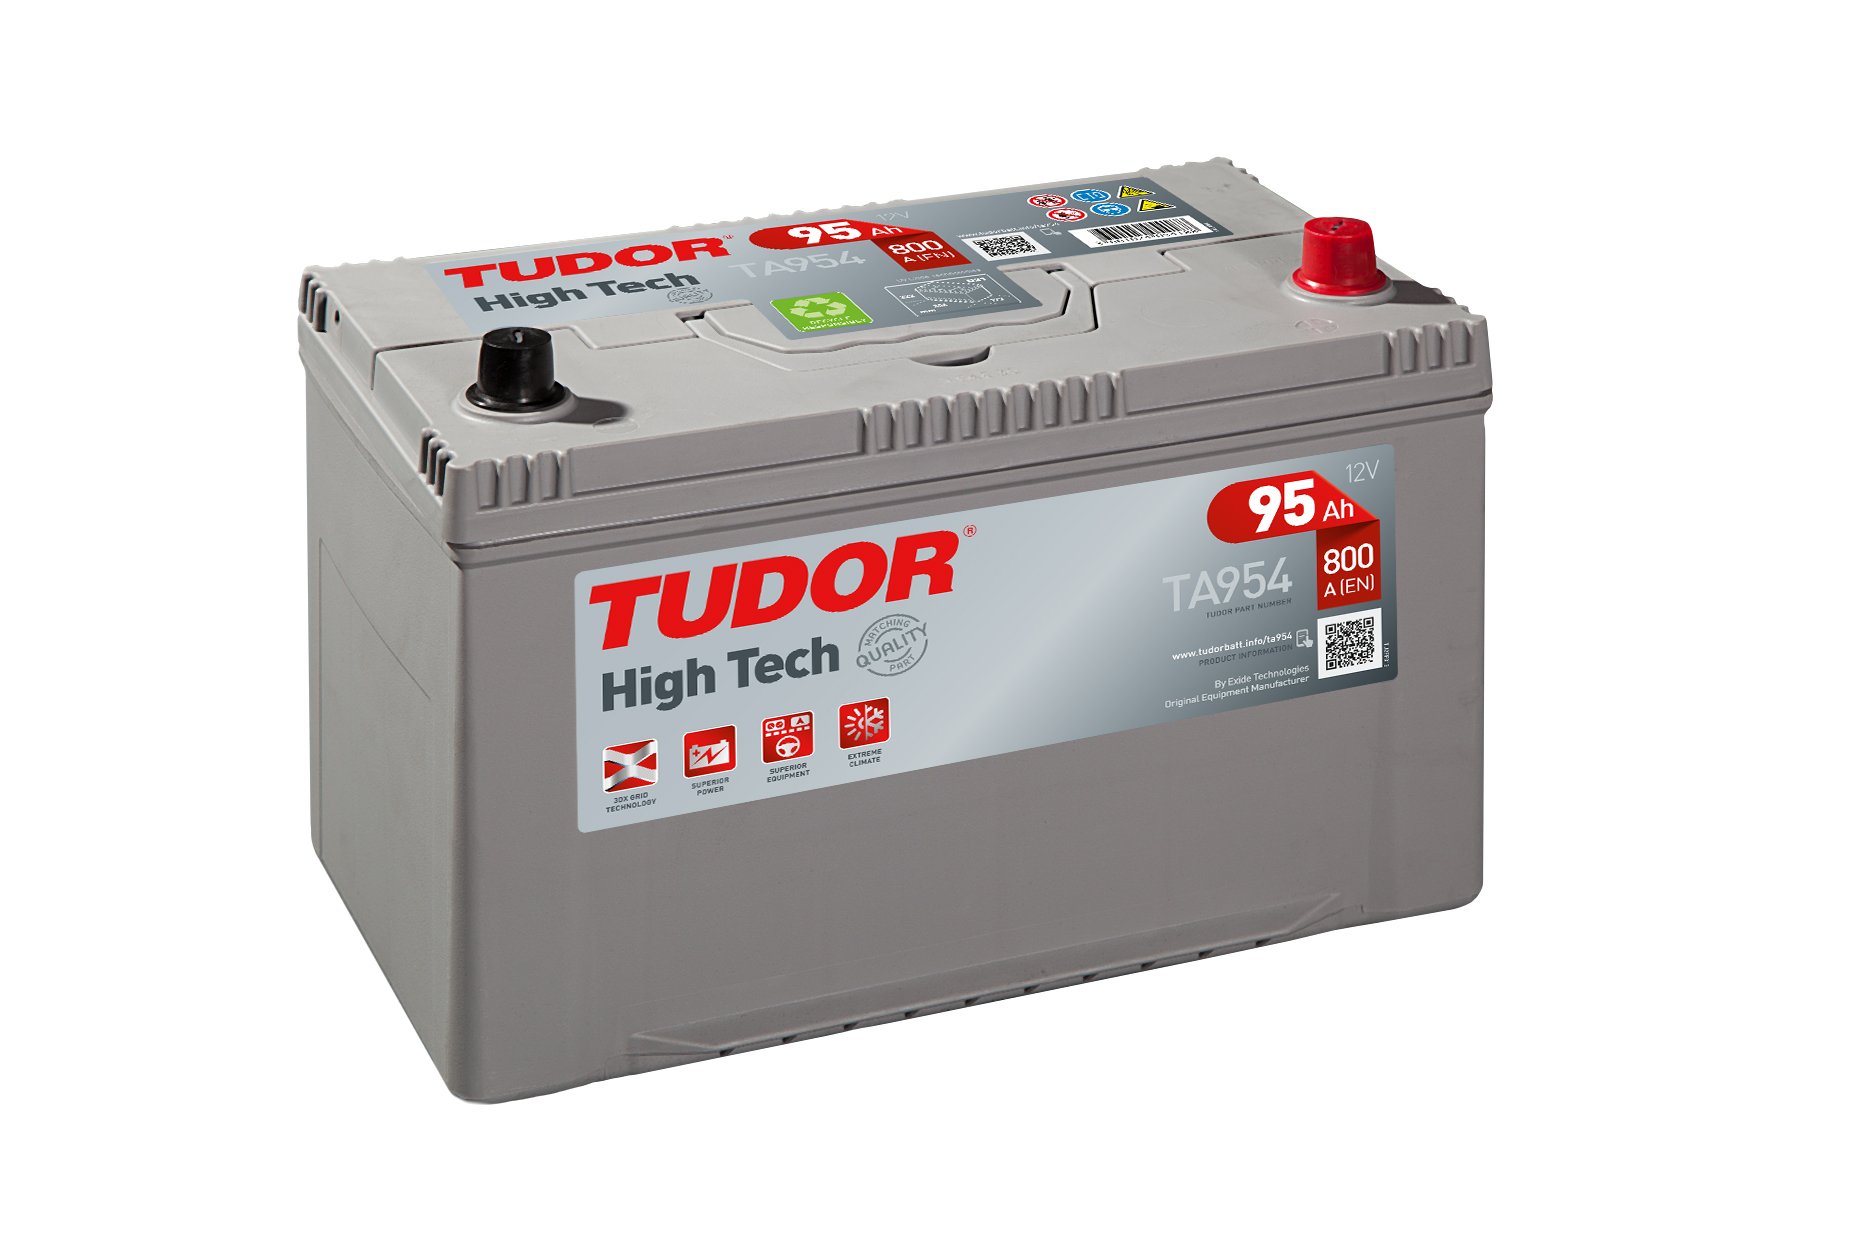 Tudor HighTech Autobatterie 95ah TA954 von Tudor HighTech 95ah TA954